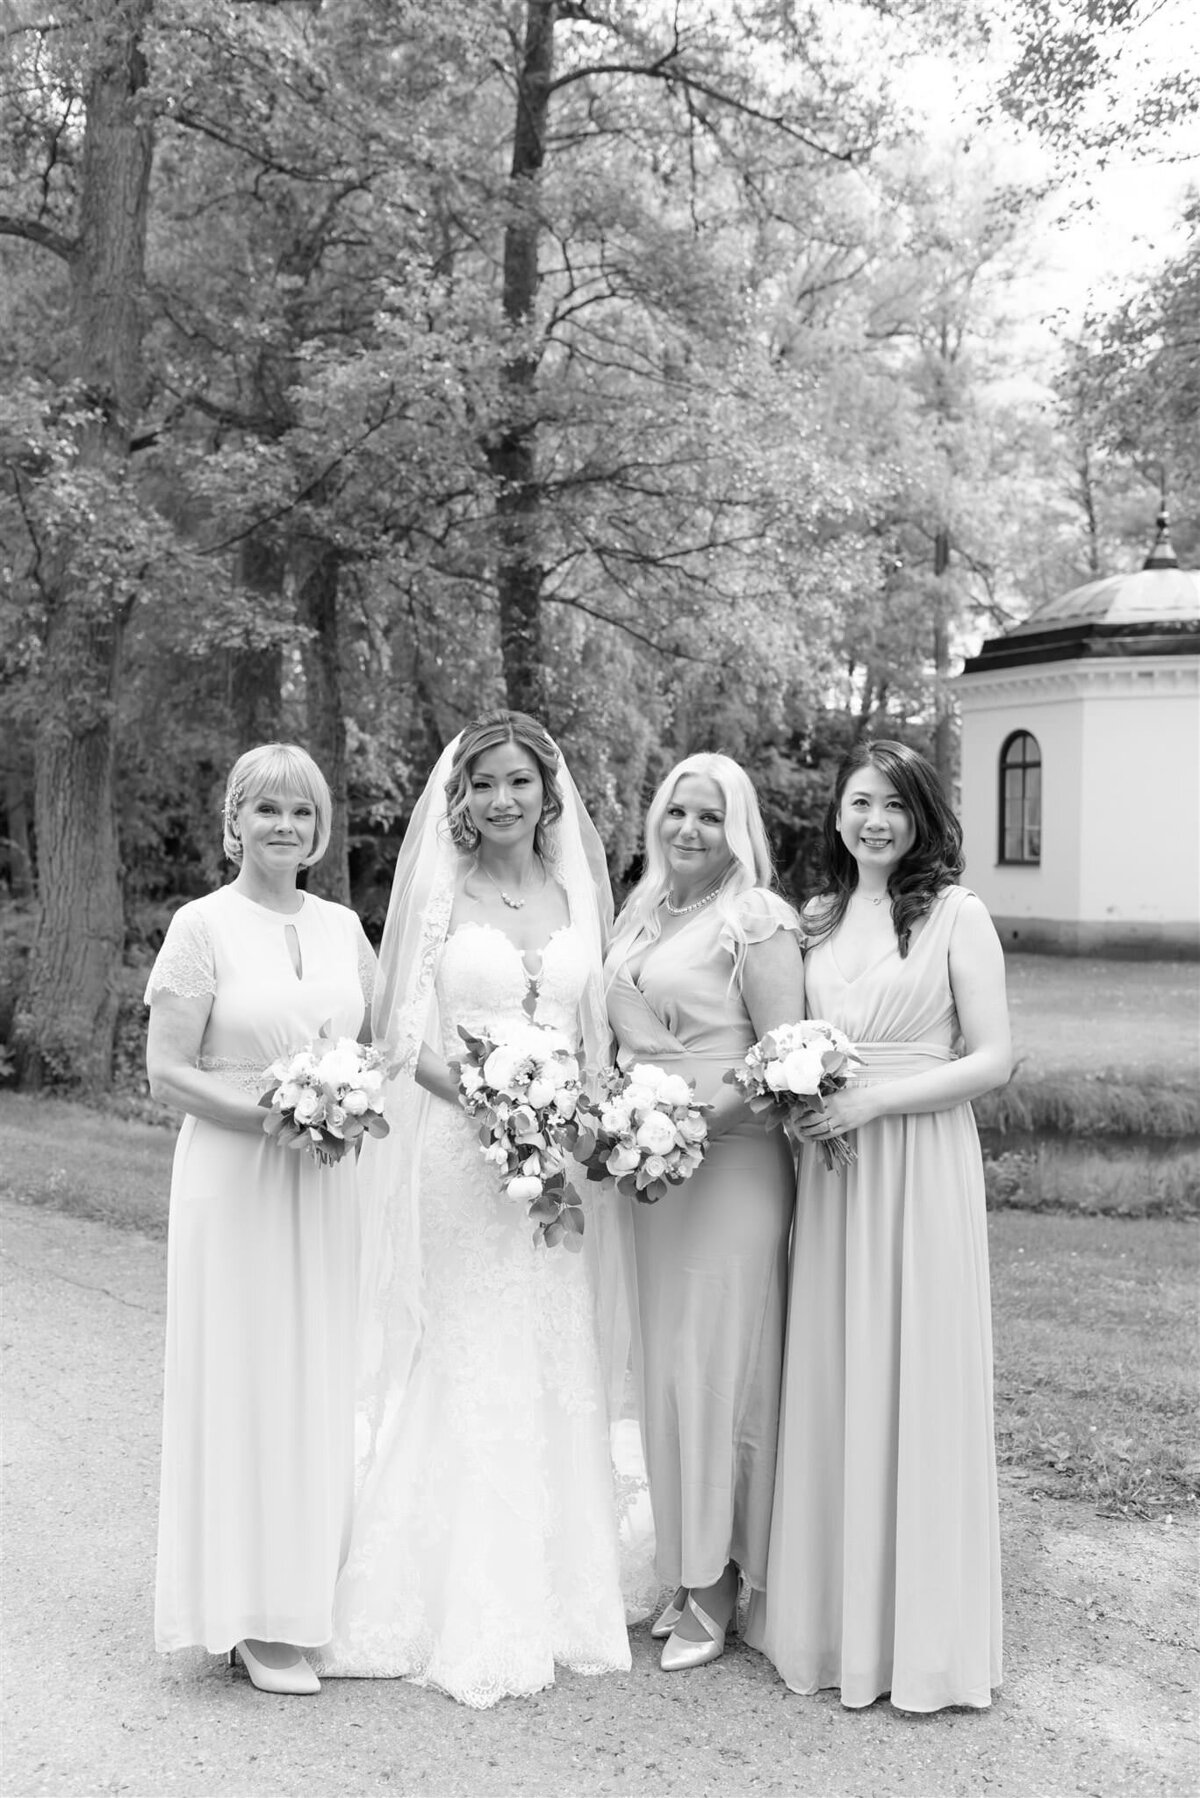 Wedding Photographer Anna Lundgren - helloalora_Rånäs Slott chateau wedding in Sweden timeless romantic bridal party portraits in the castle garden white wedding bouquet